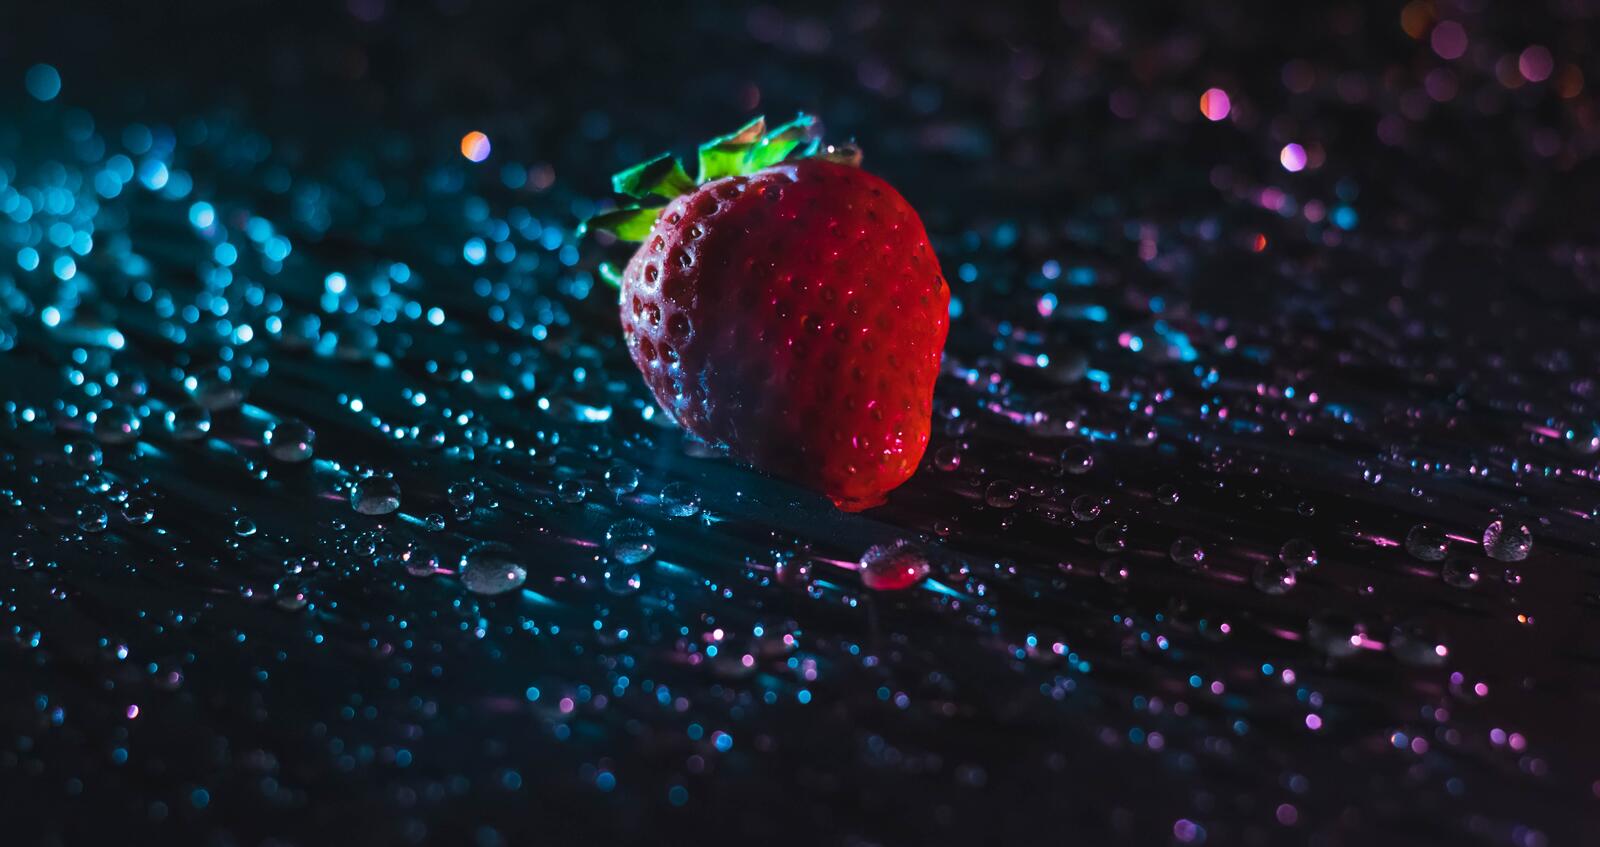 Wallpapers wallpaper strawberries photos drops of water on the desktop